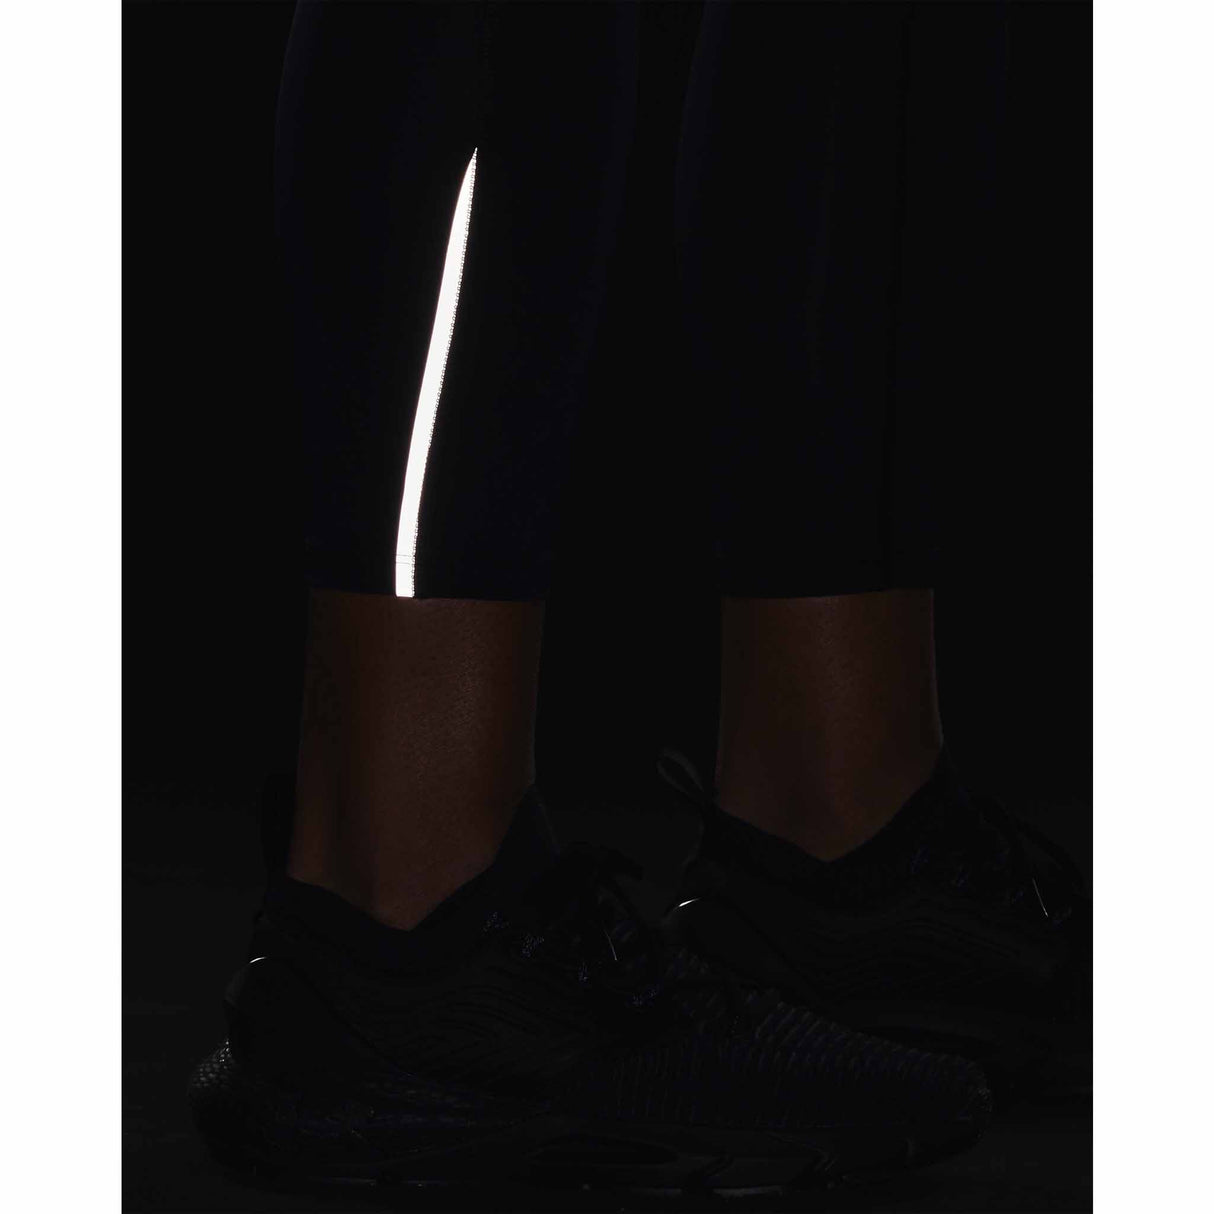 UA Fly Fast 3.0 collants à la cheville femme reflets- black / reflective